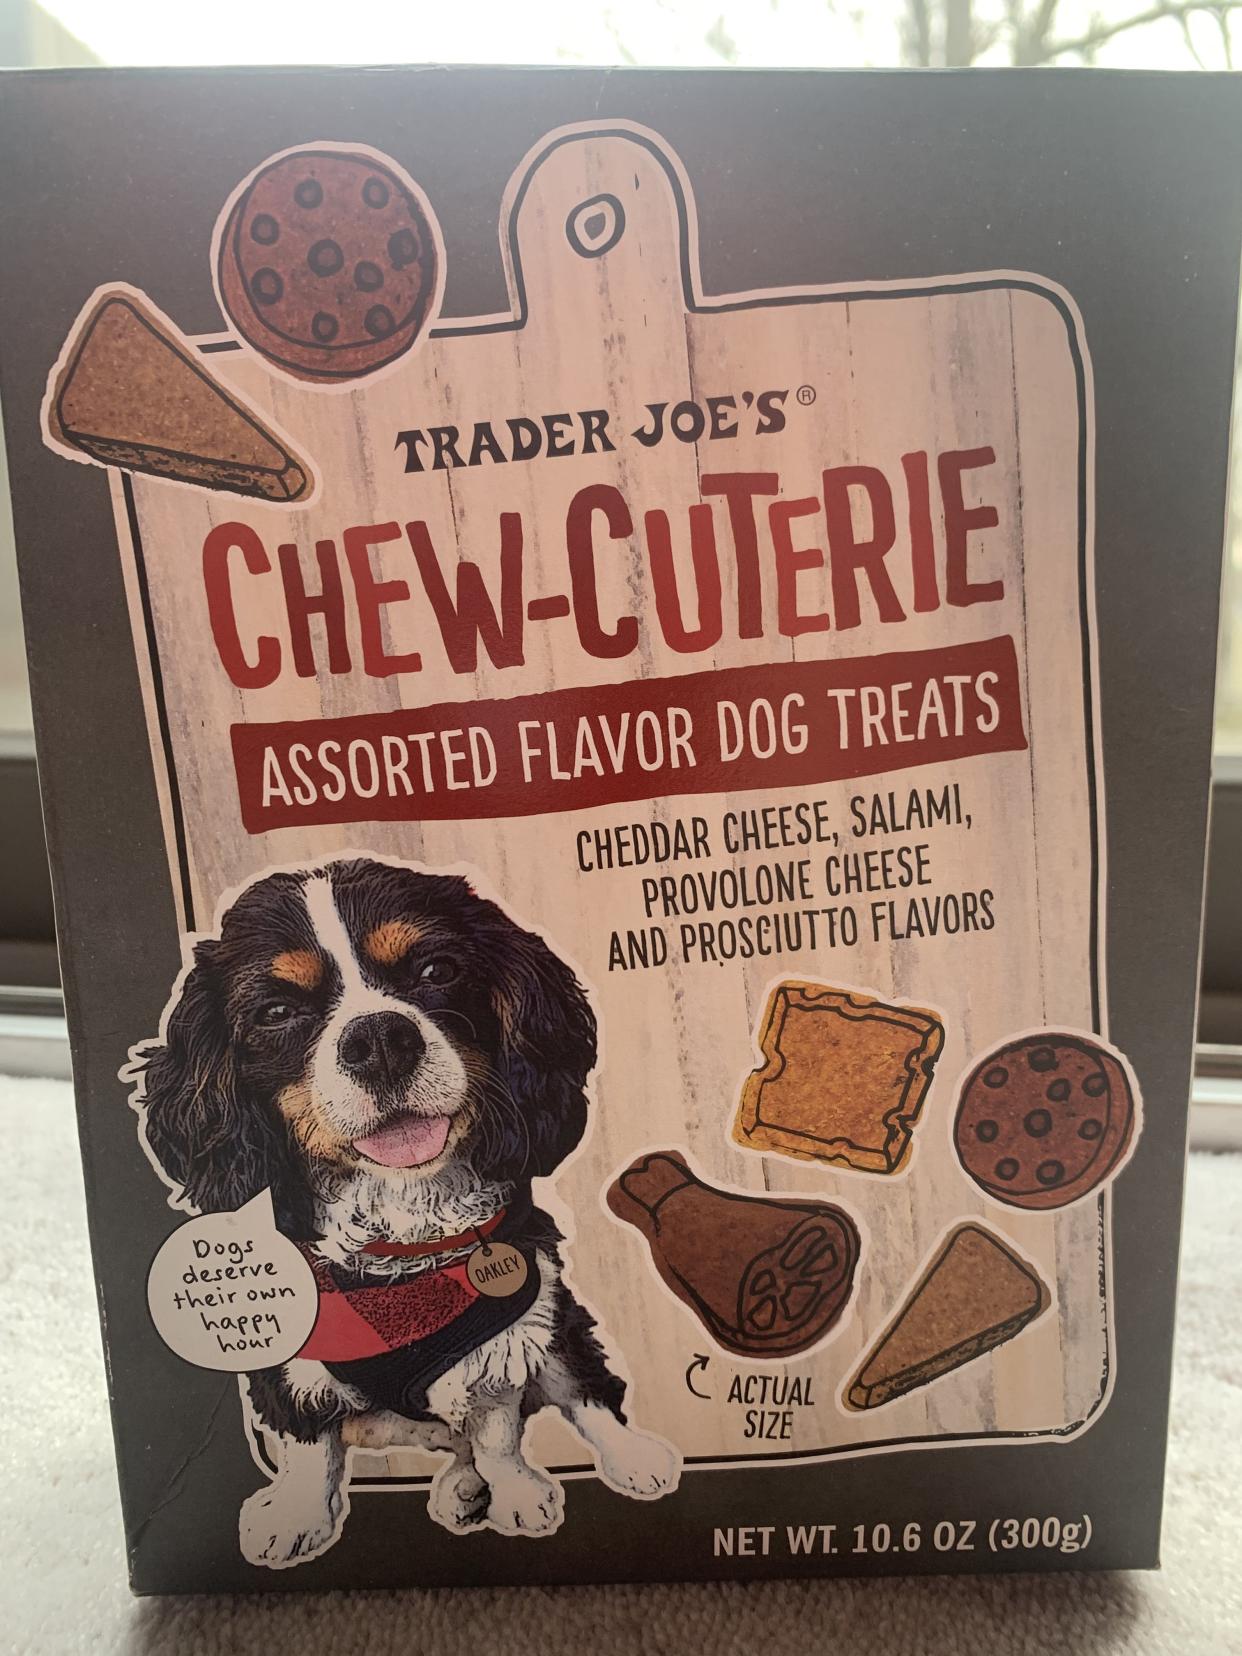 Trader Joe's Chewcuterie dog treats